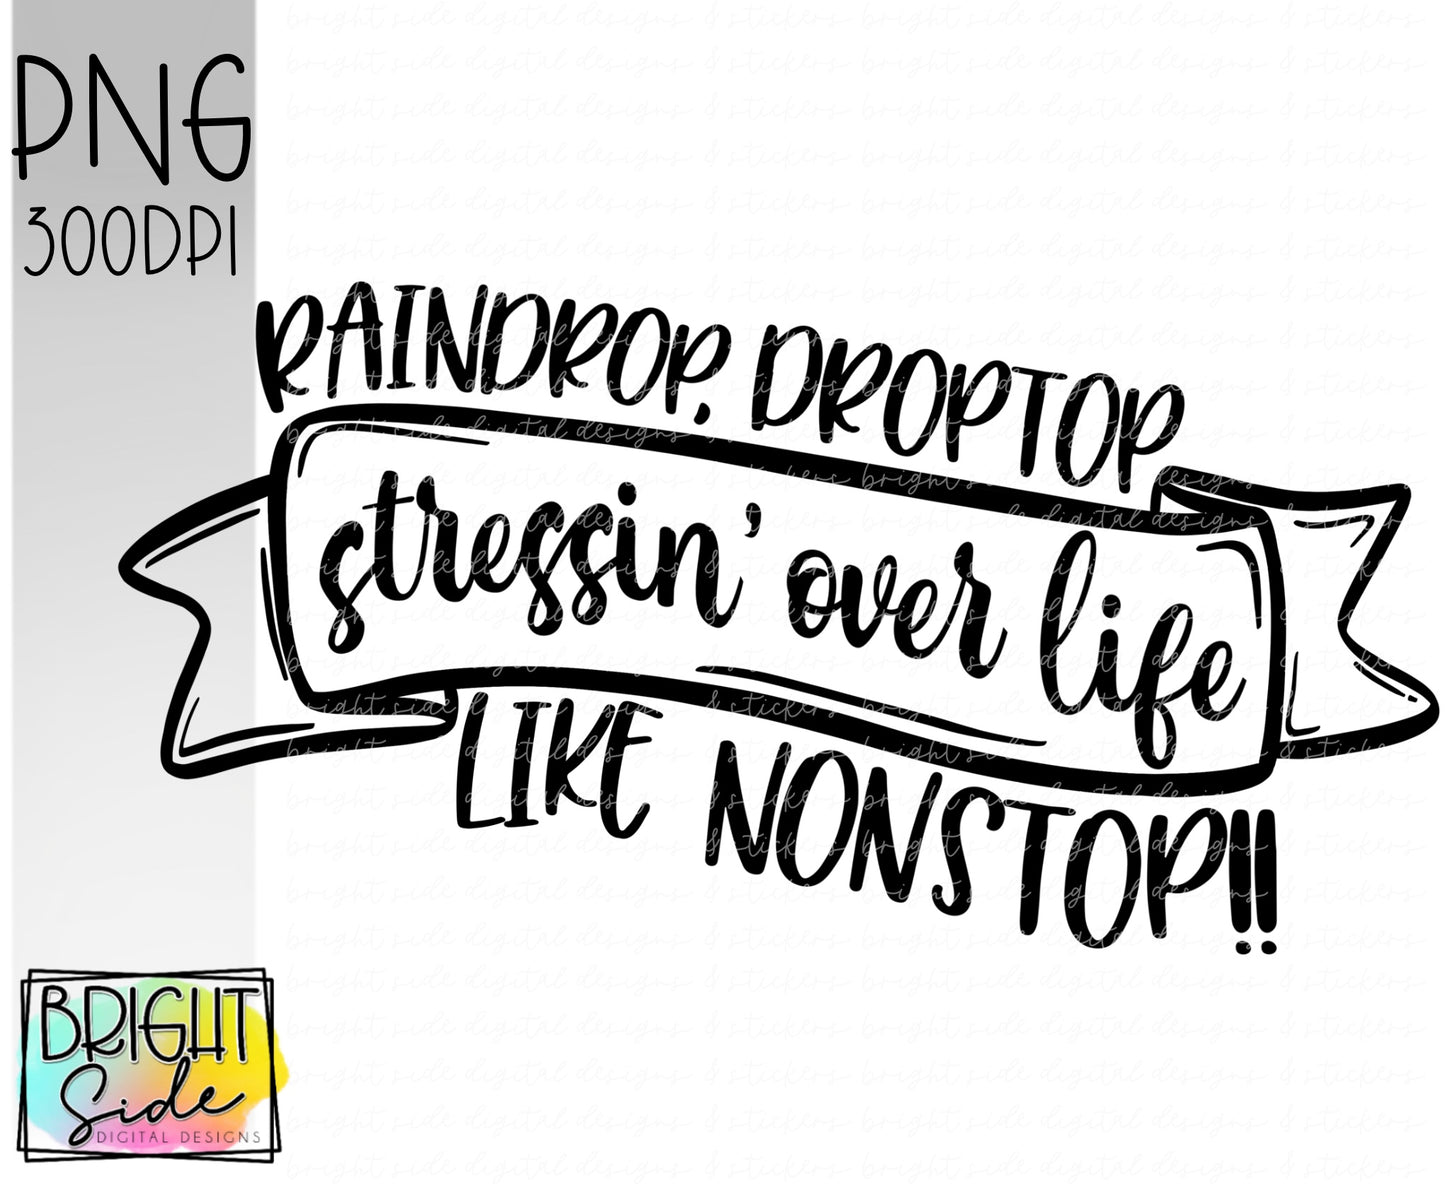 Raindrop, droptop stressin’ over life like nonstop!